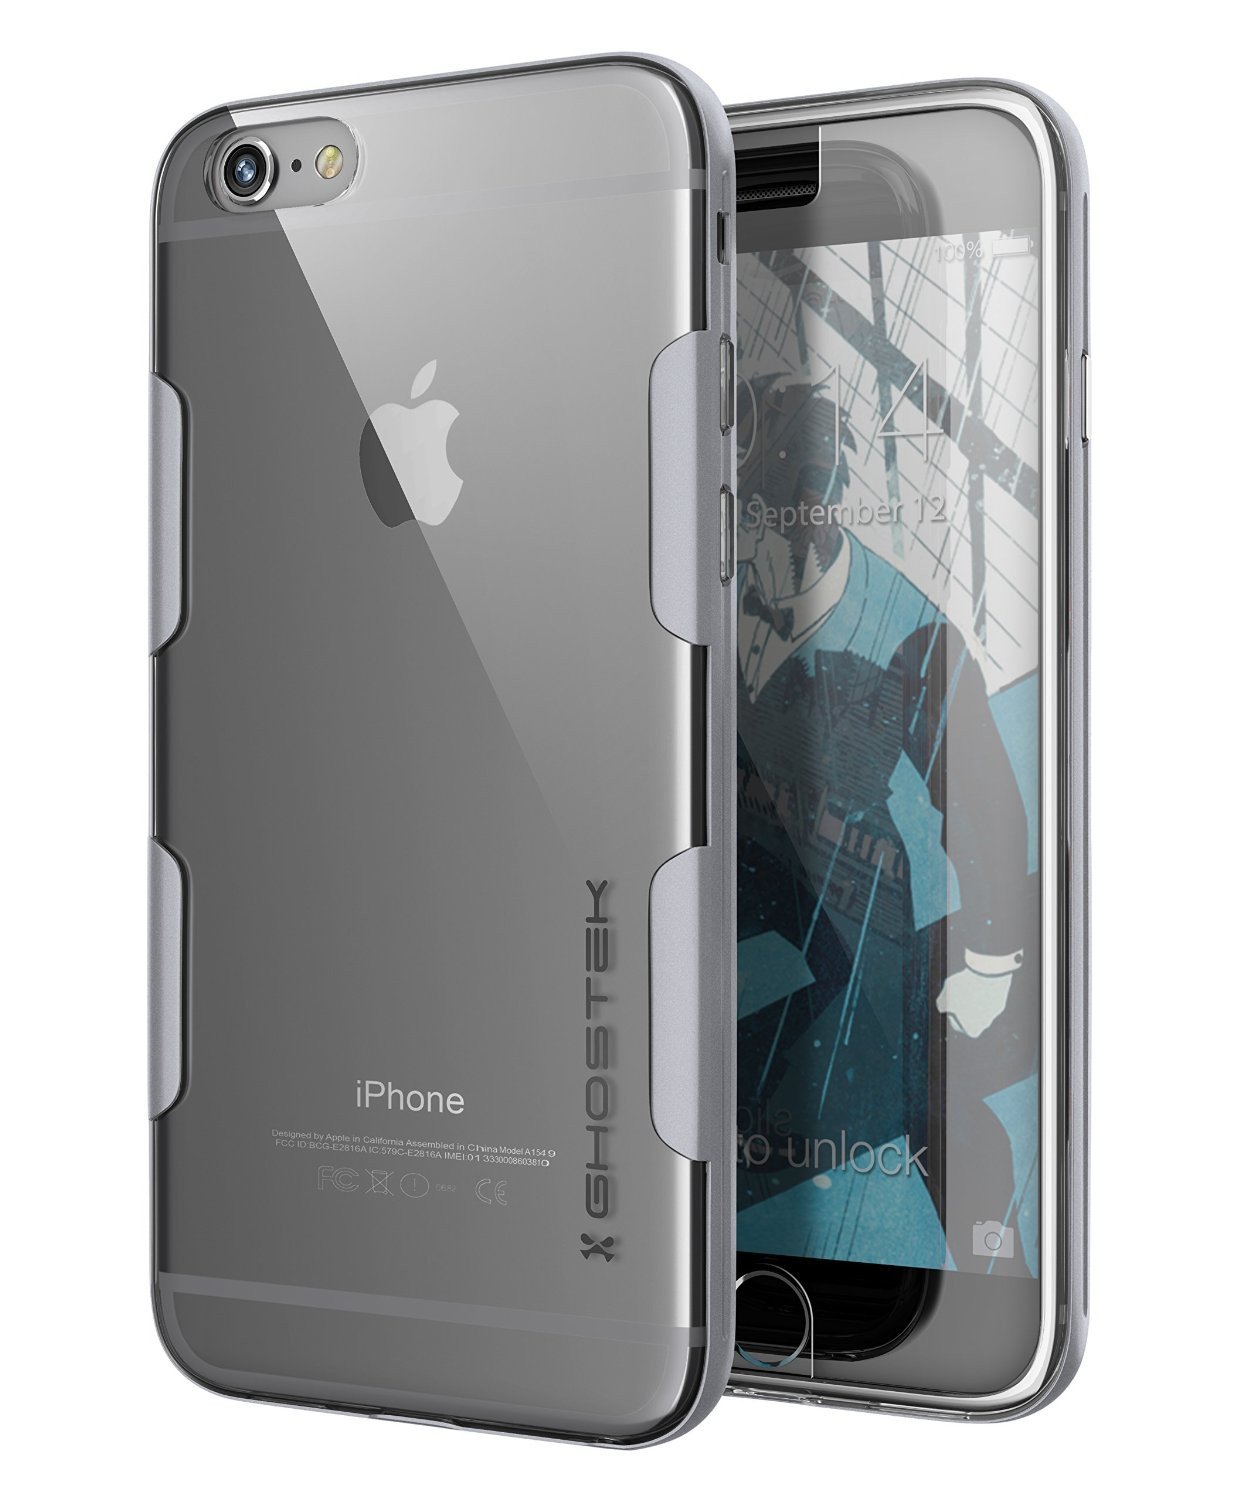 iPhone 6s Plus Case Silver Ghostek Cloak, Slim Protective w/ Tempered Glass | Lifetime Warranty